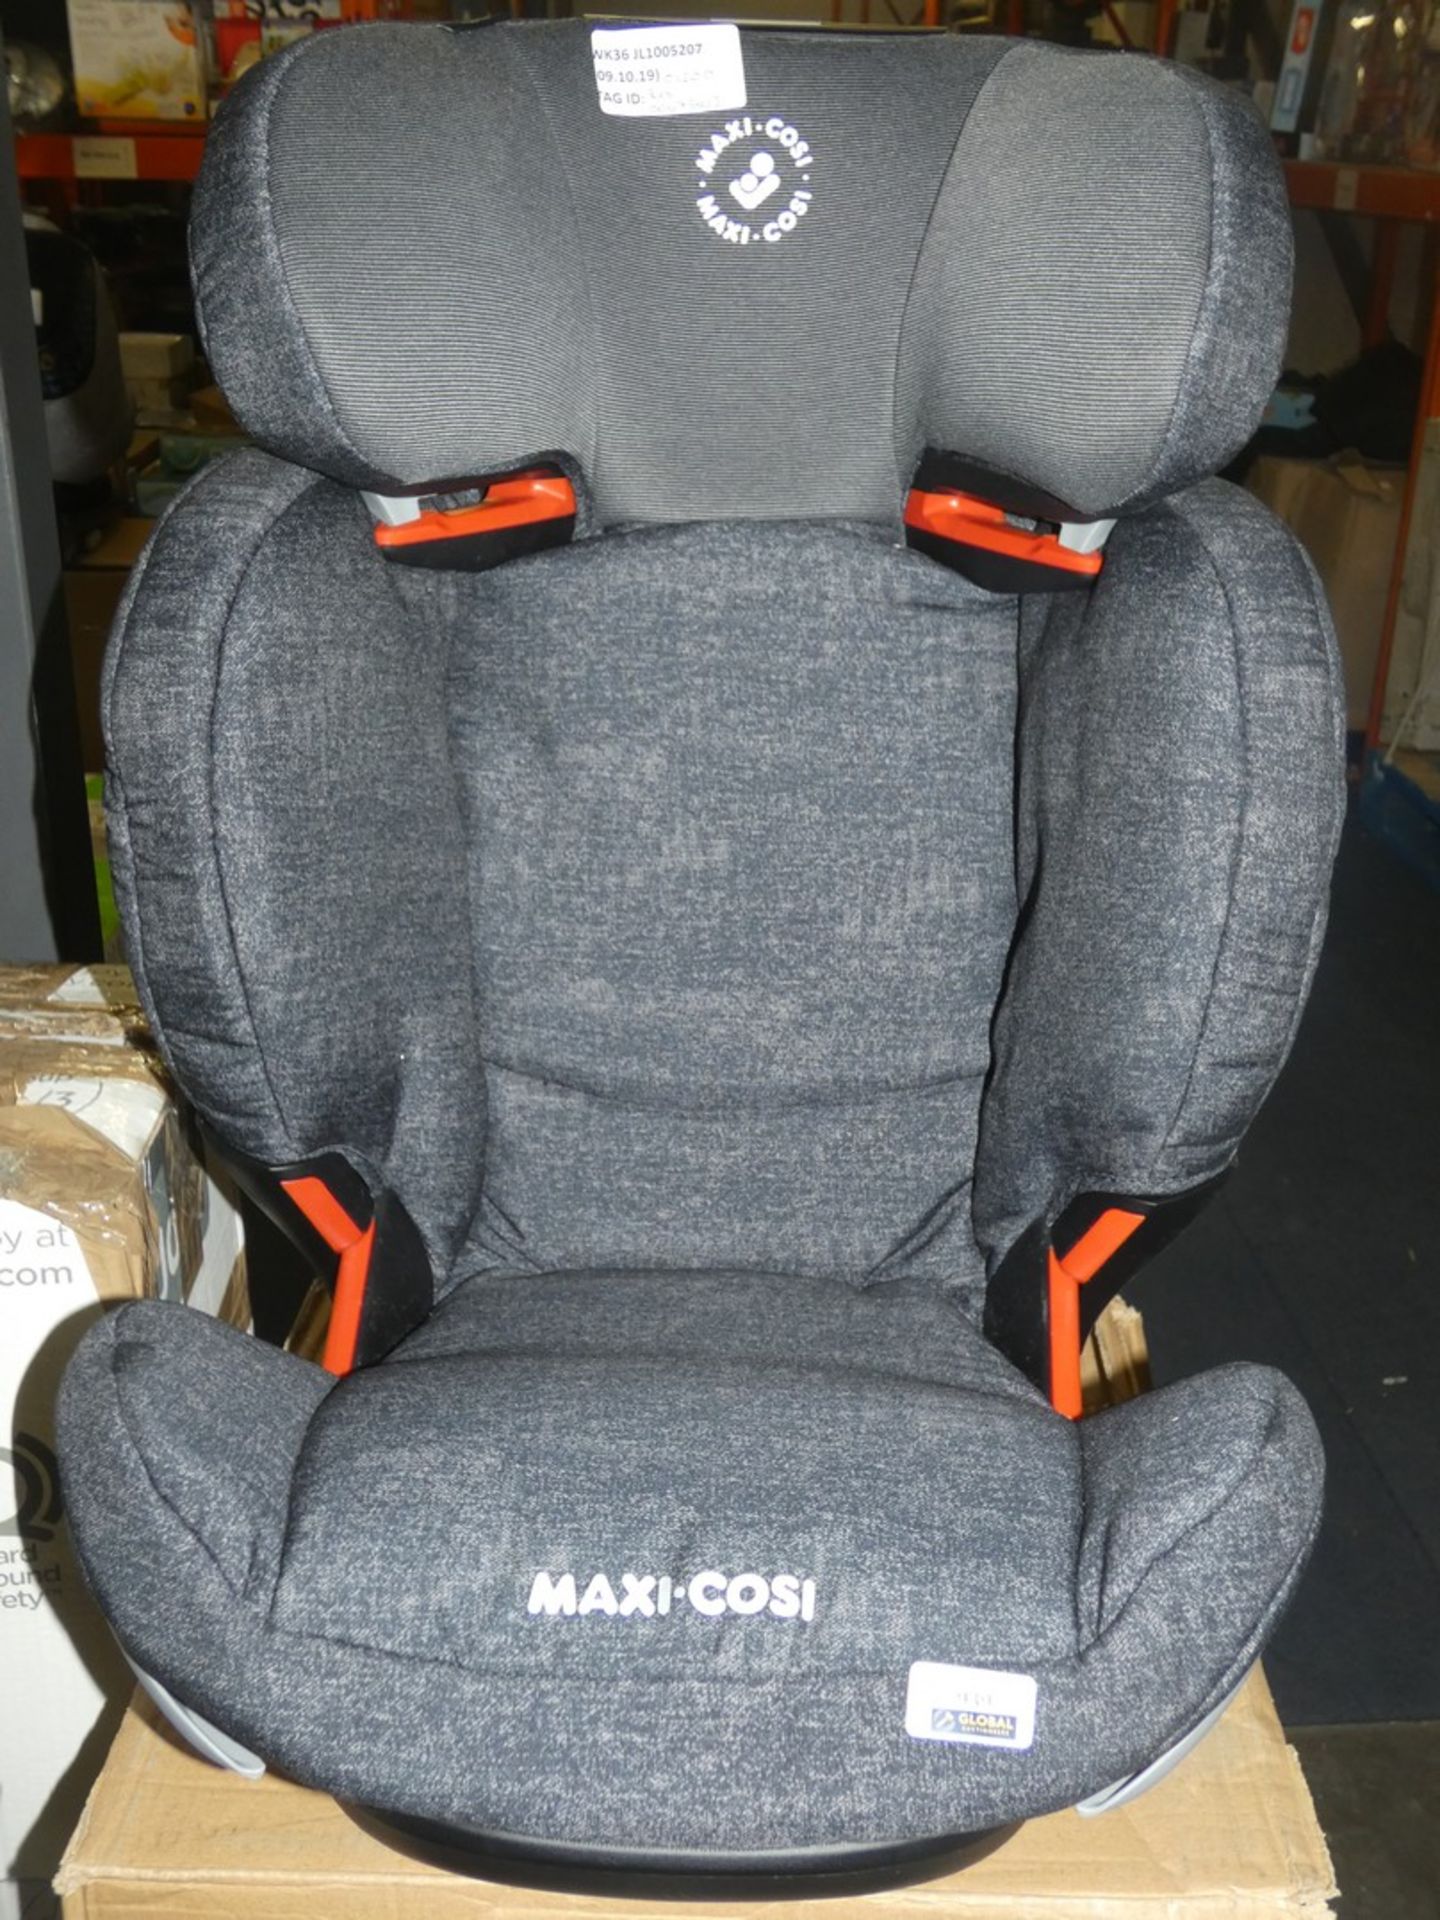 Boxed Maxi Cosi Rodifix Children's Car Seat RRP £120 (RET00673653) (Public Viewing and Appraisals